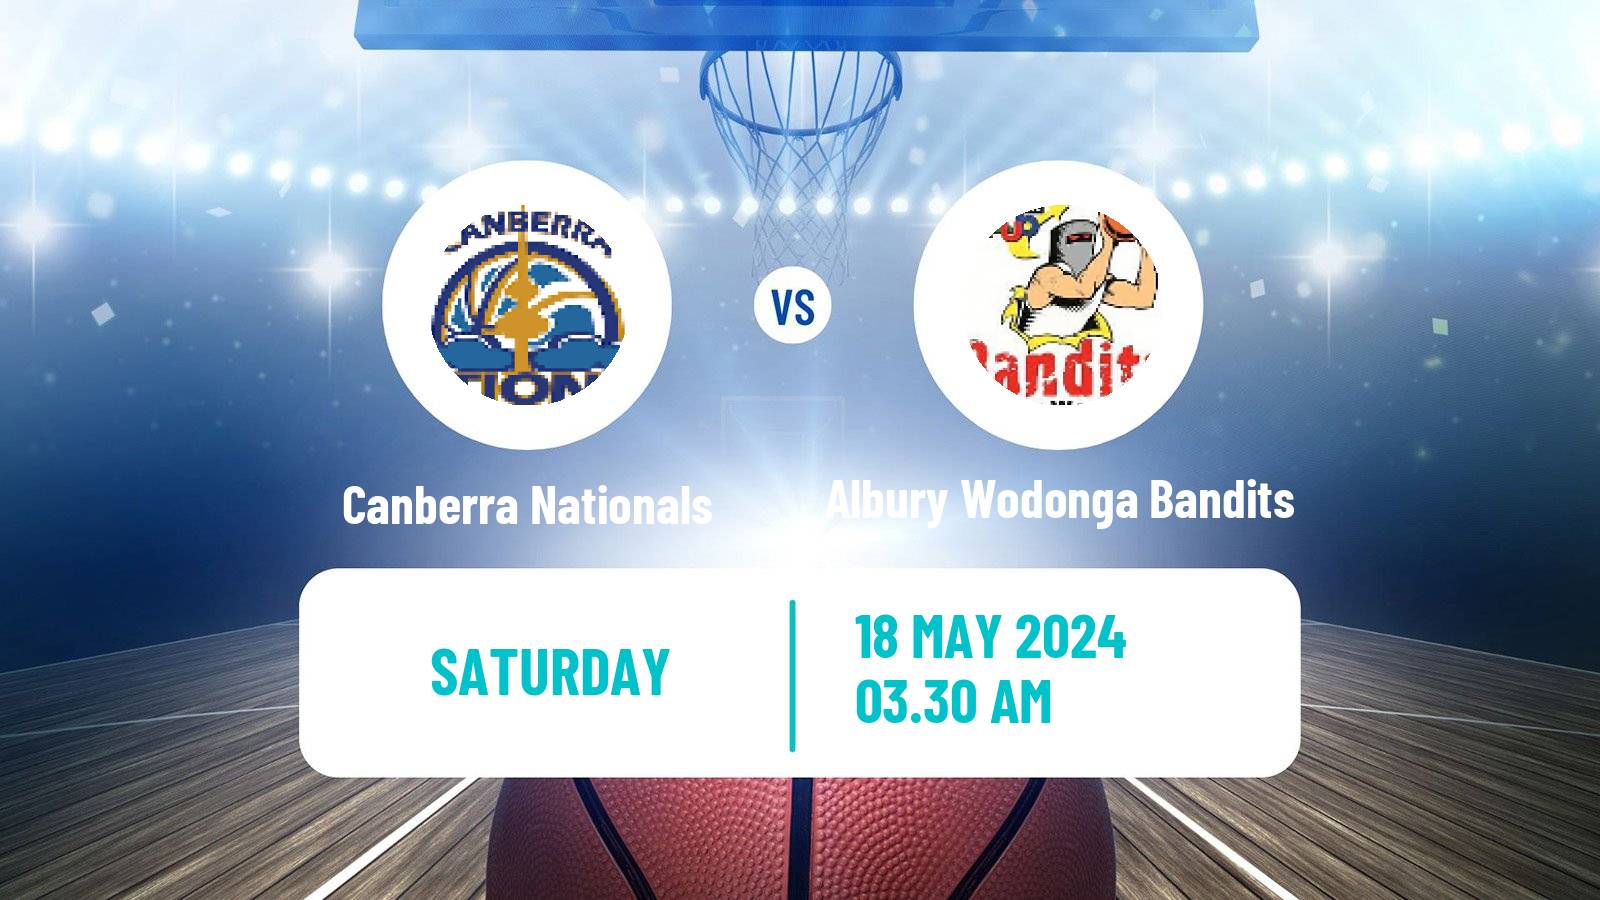 Basketball Australian NBL1 East Women Canberra Nationals - Albury Wodonga Bandits